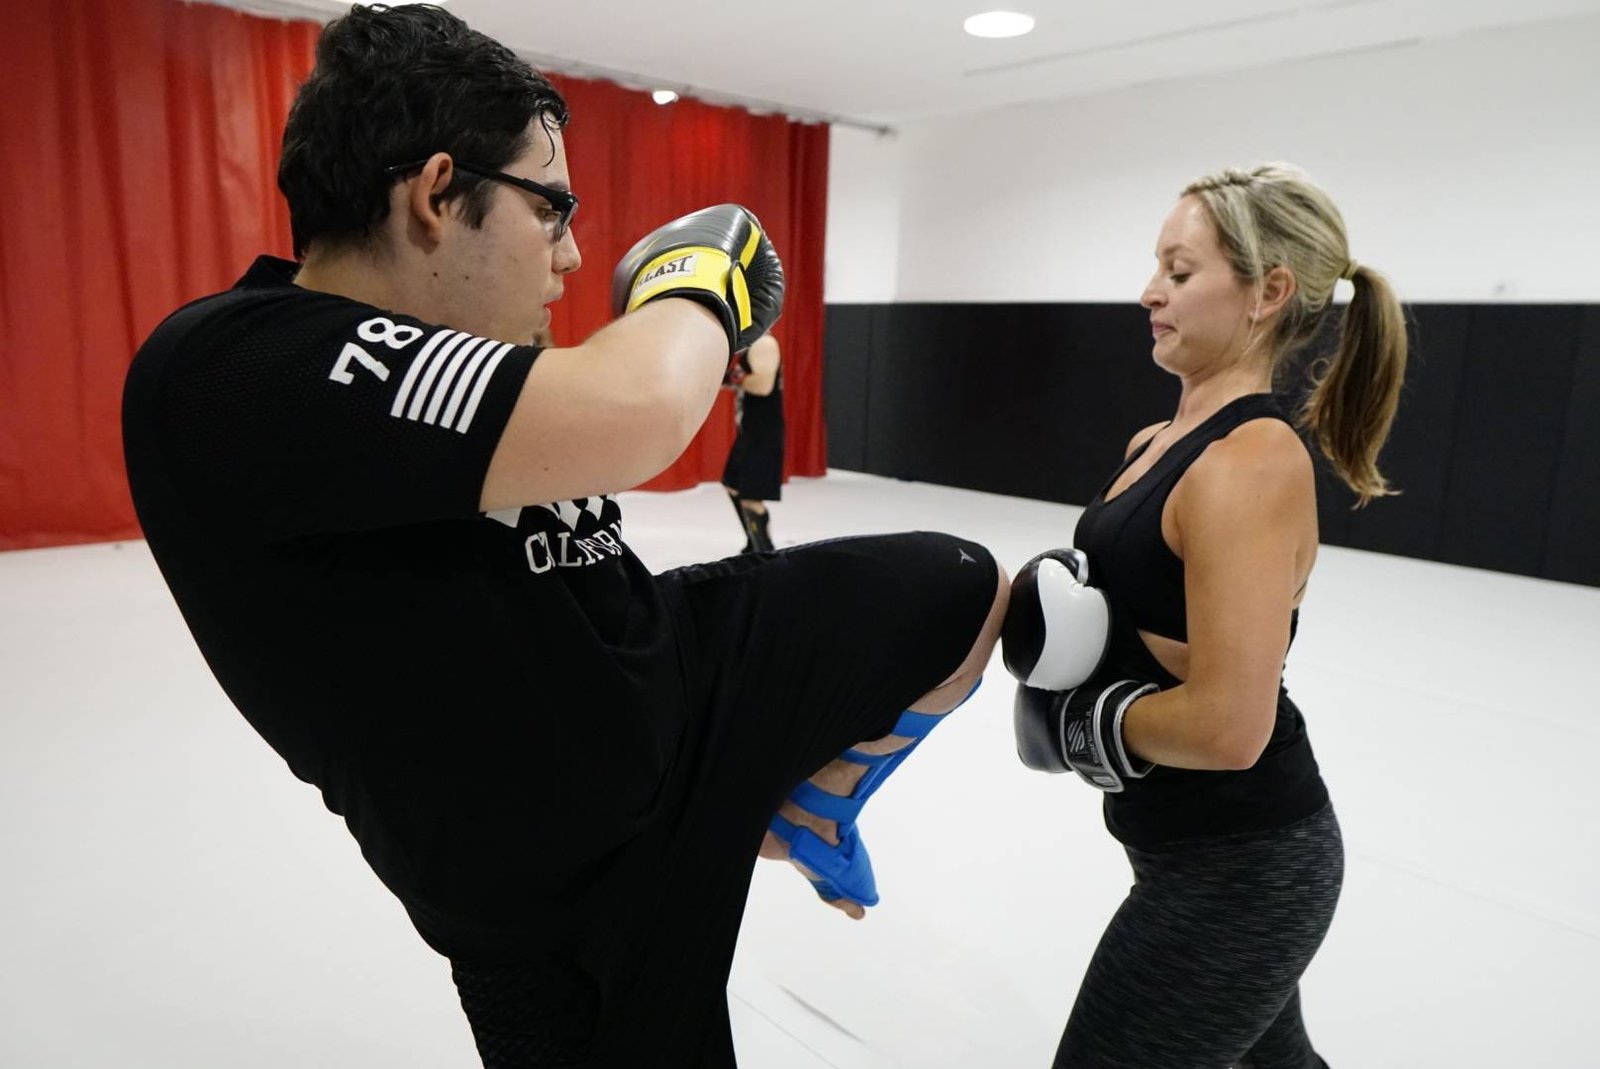 man and woman practicing muay thai kicks